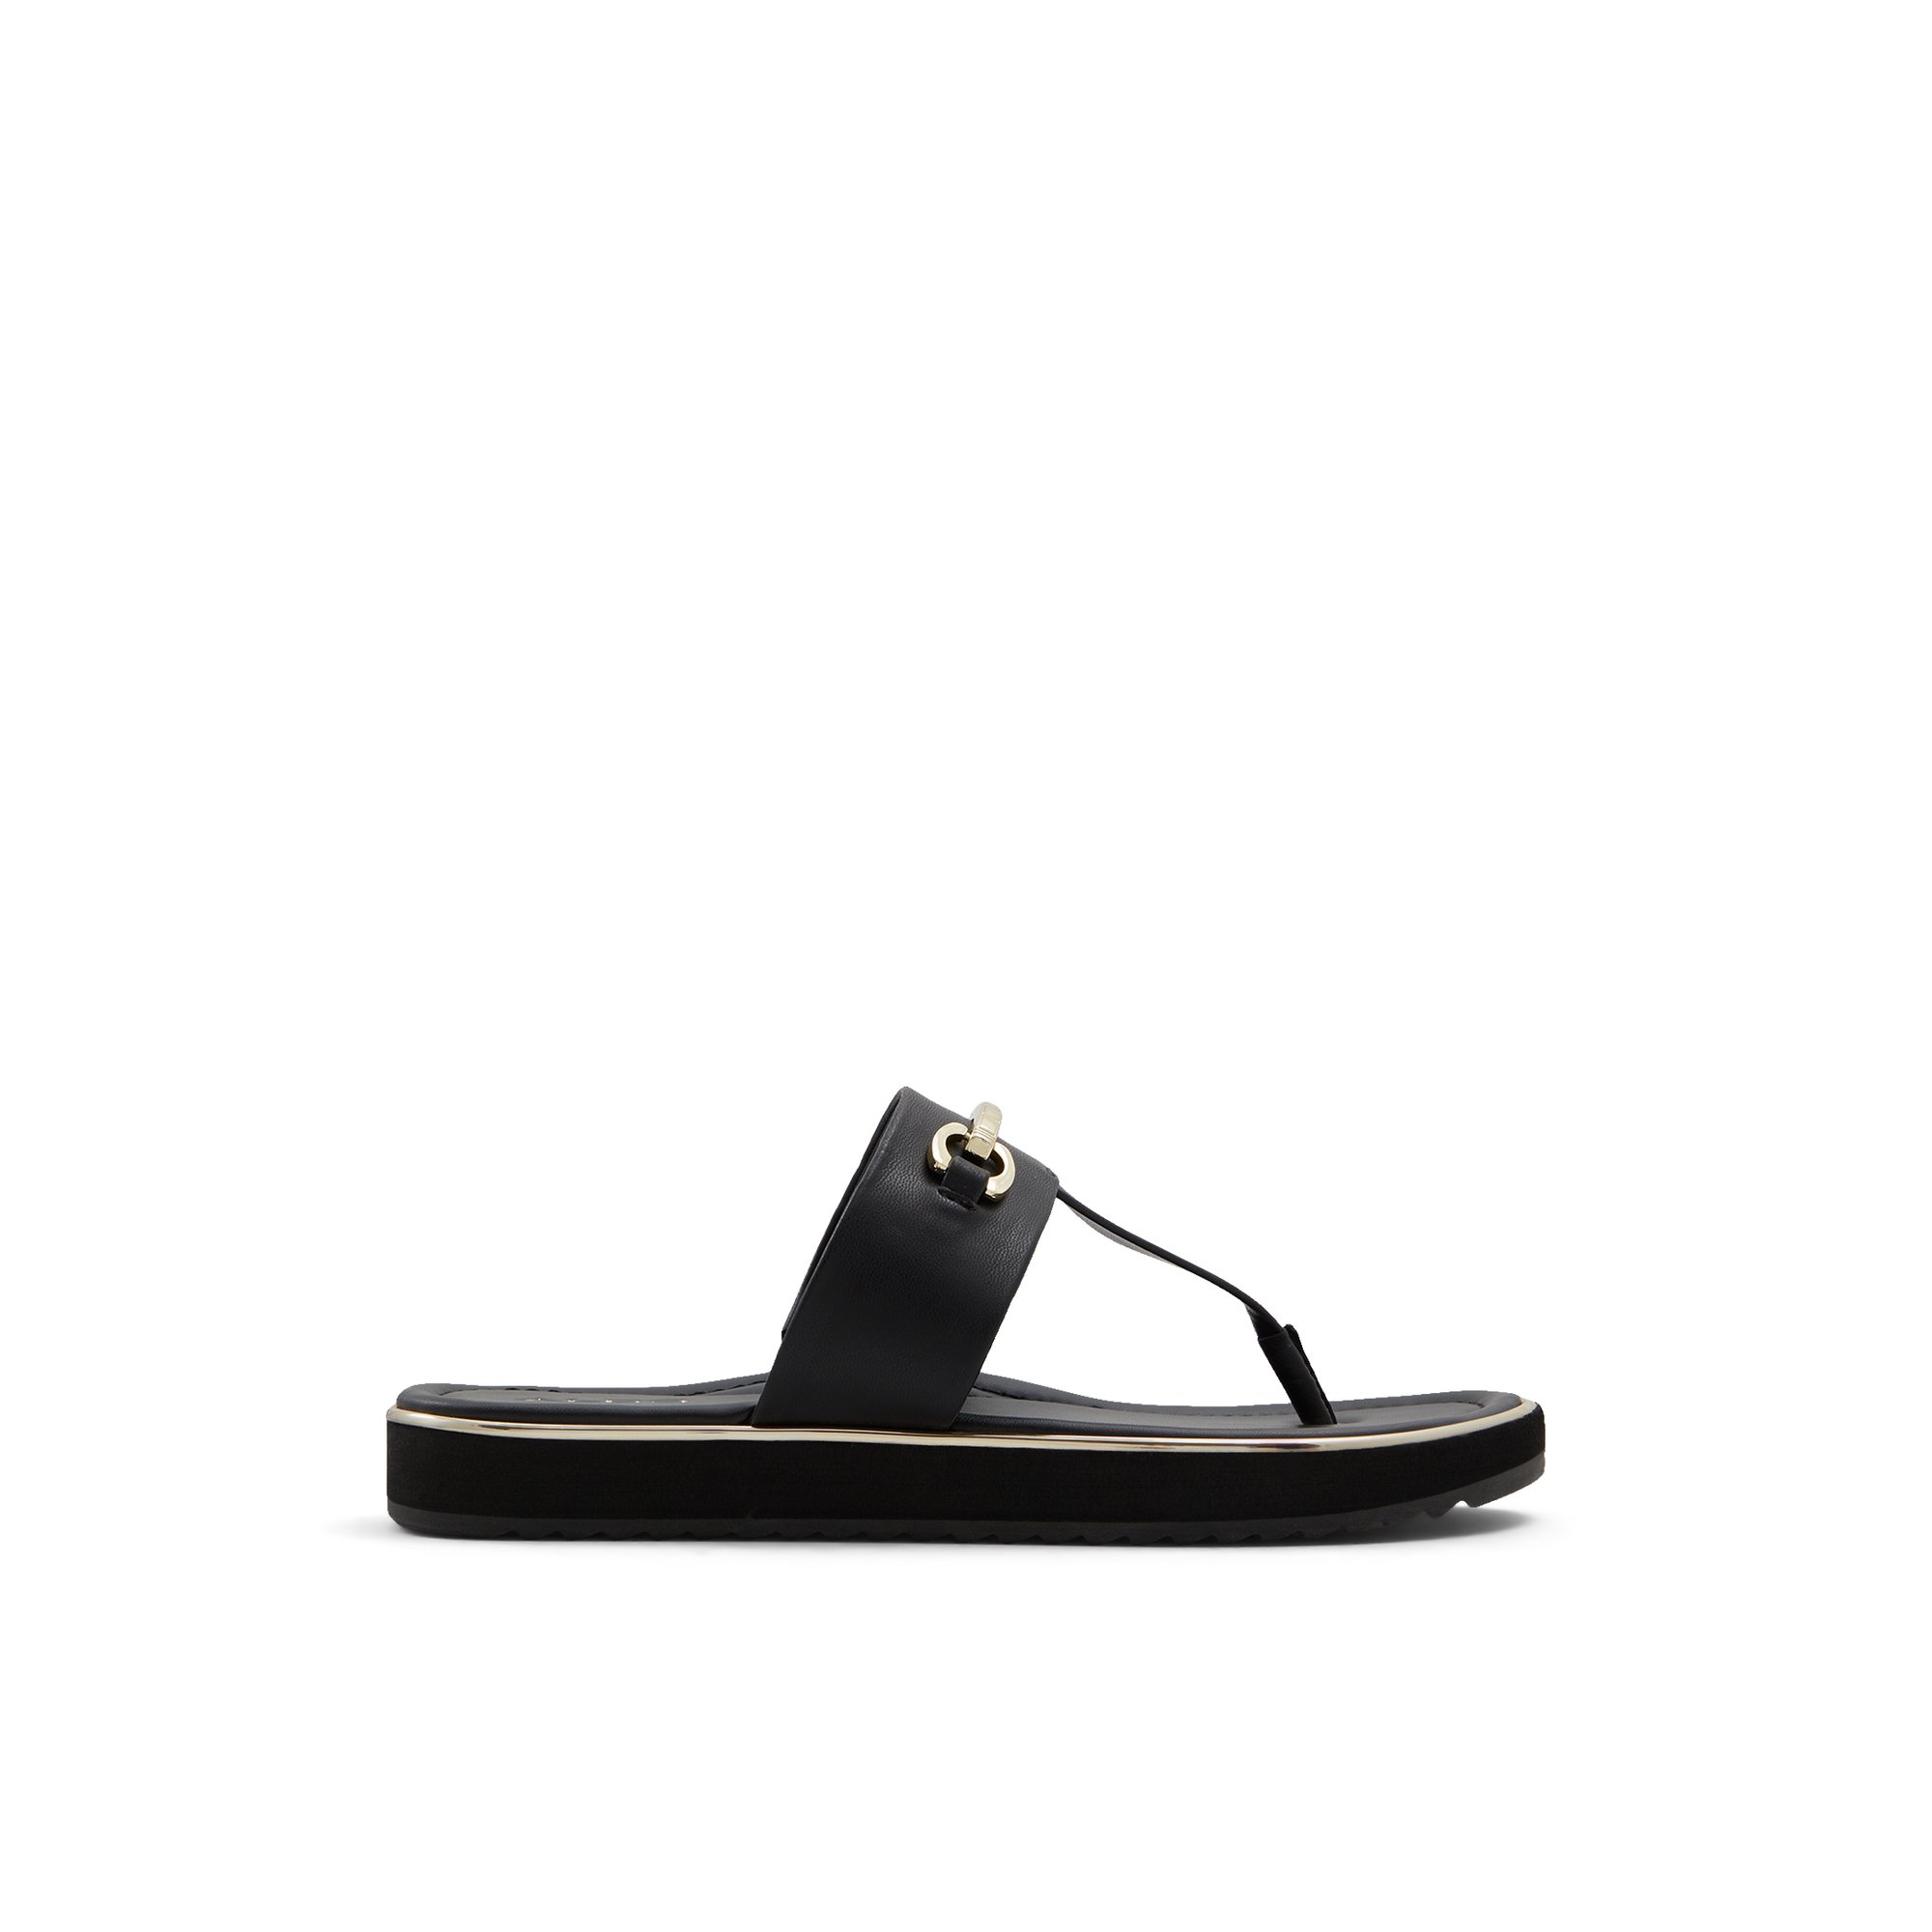 ALDO Deverena - Women's Sandals Flats - Black